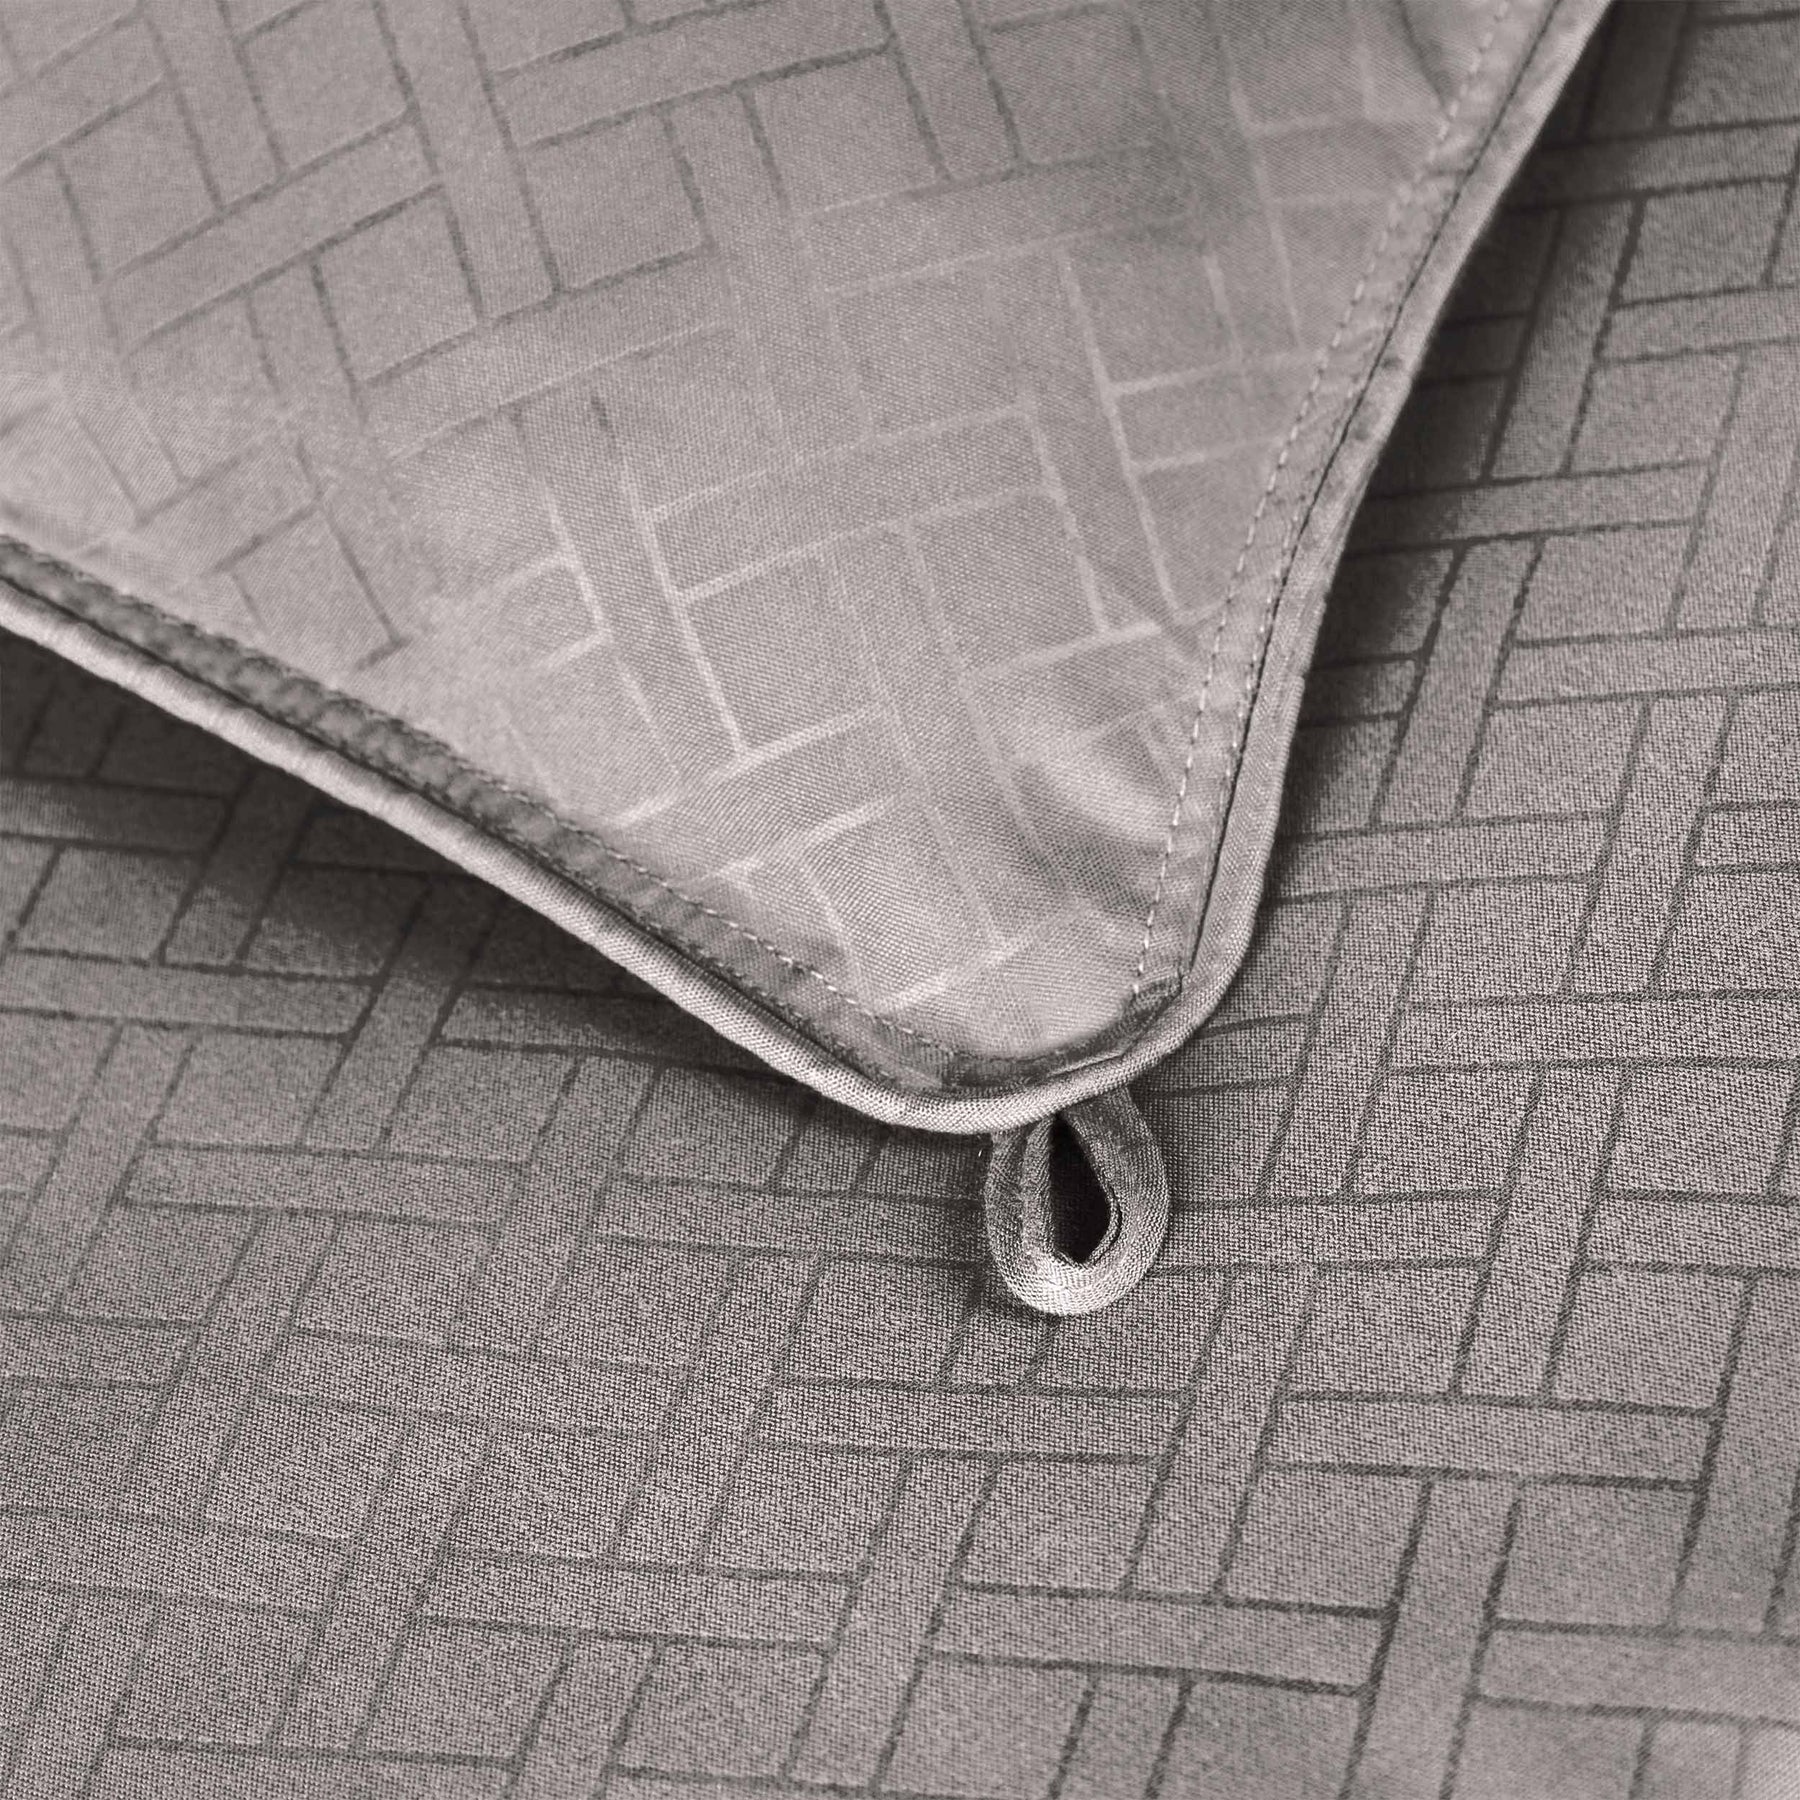 Monochrome Basketweave Plush Microfiber Down Alternative Comforter - Charcoal